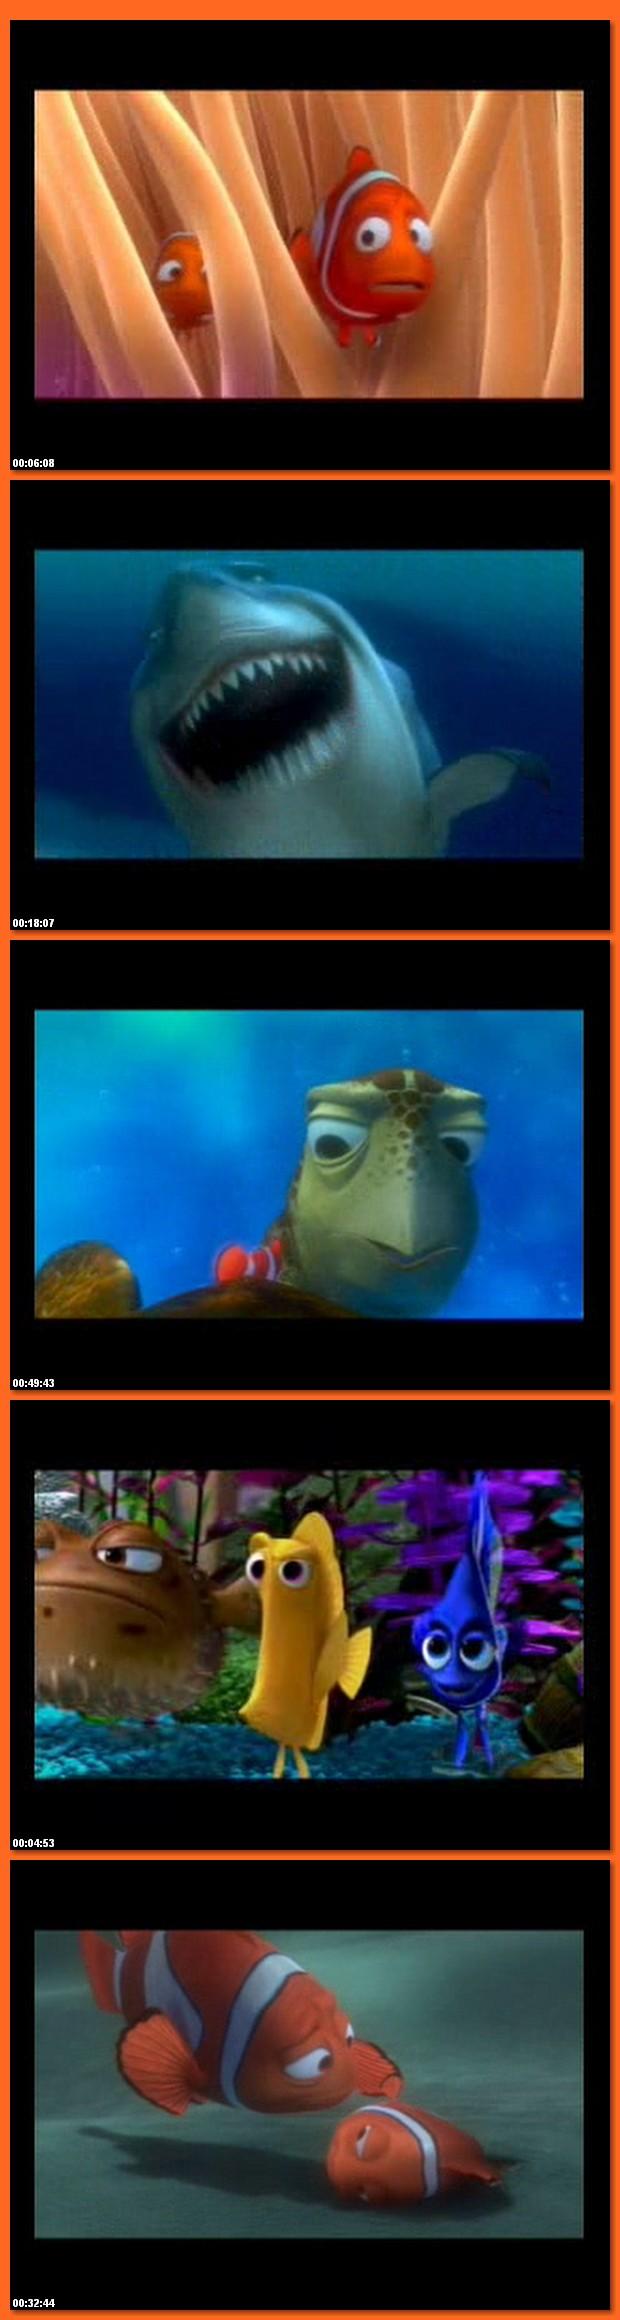 Finding Nemo 11111110